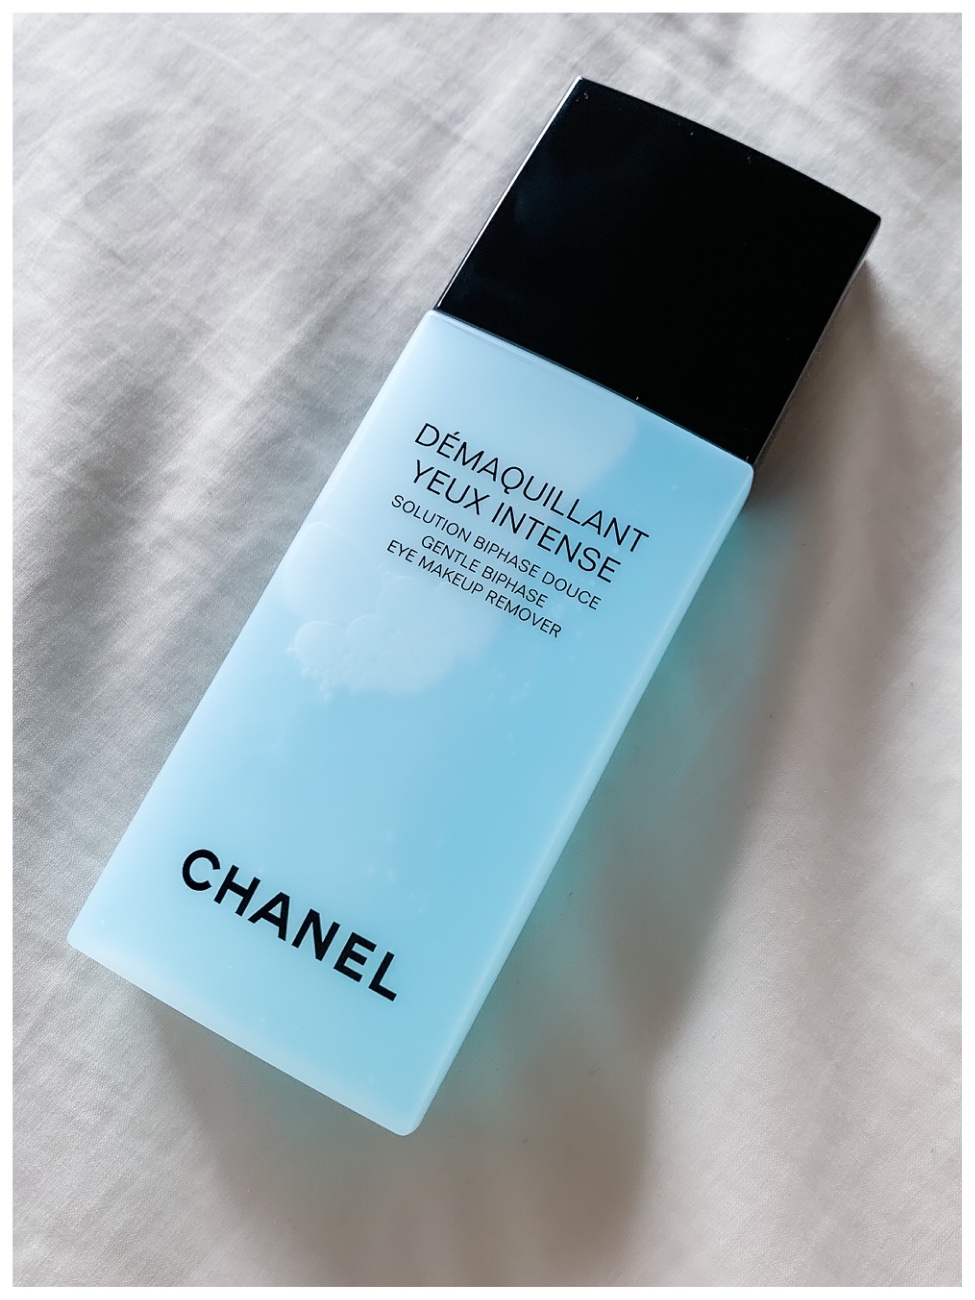 Chanel Demaquillant Yeux Intense Gentle Bi-phase Eye Remover